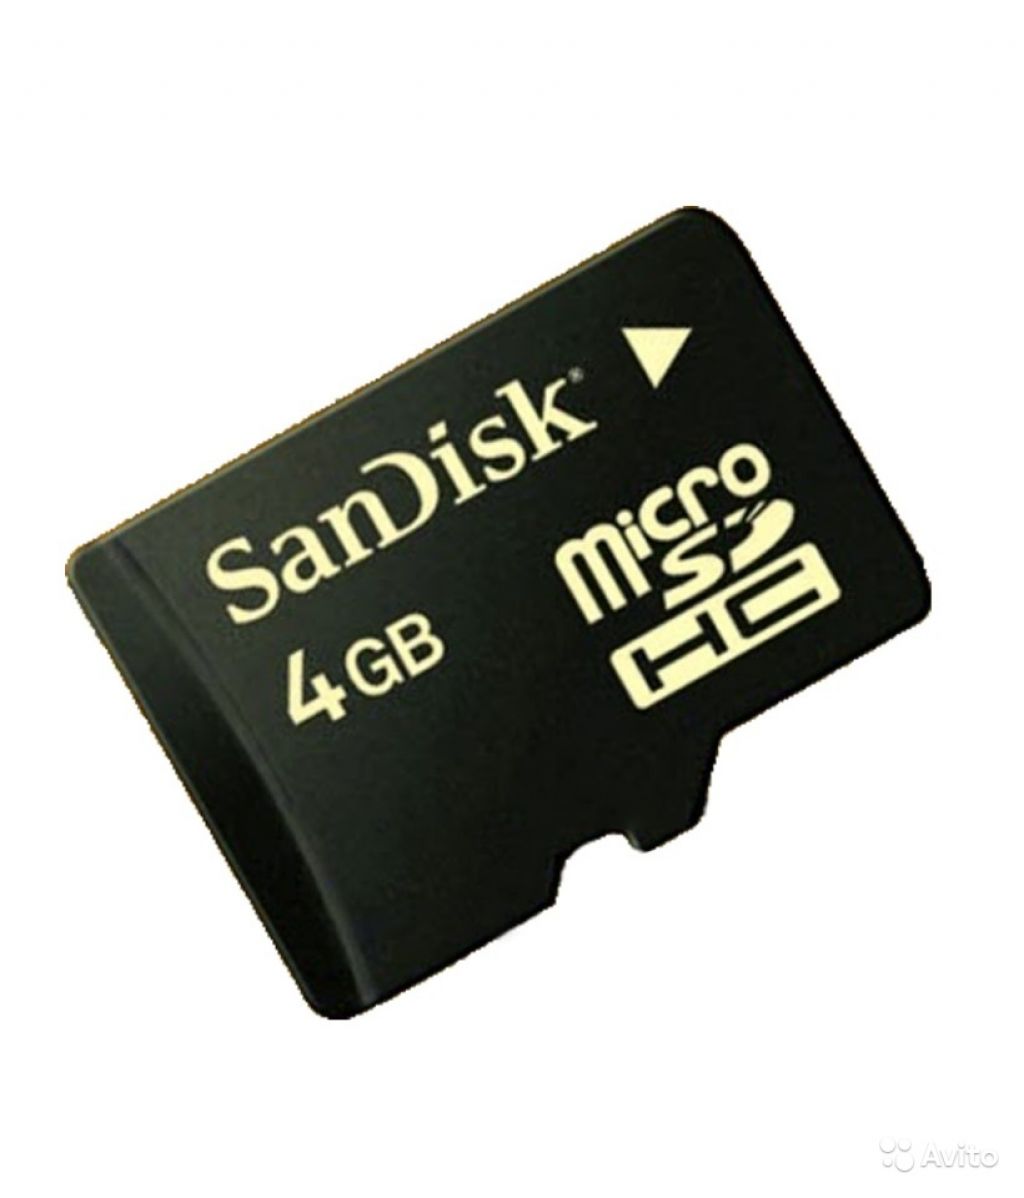 Флешка памяти для телефона. Флешки микро SD SANDISK. MICROSD 4 GB. Флешка SANDISK 4gb. Флешки микро на 4 ГБ.